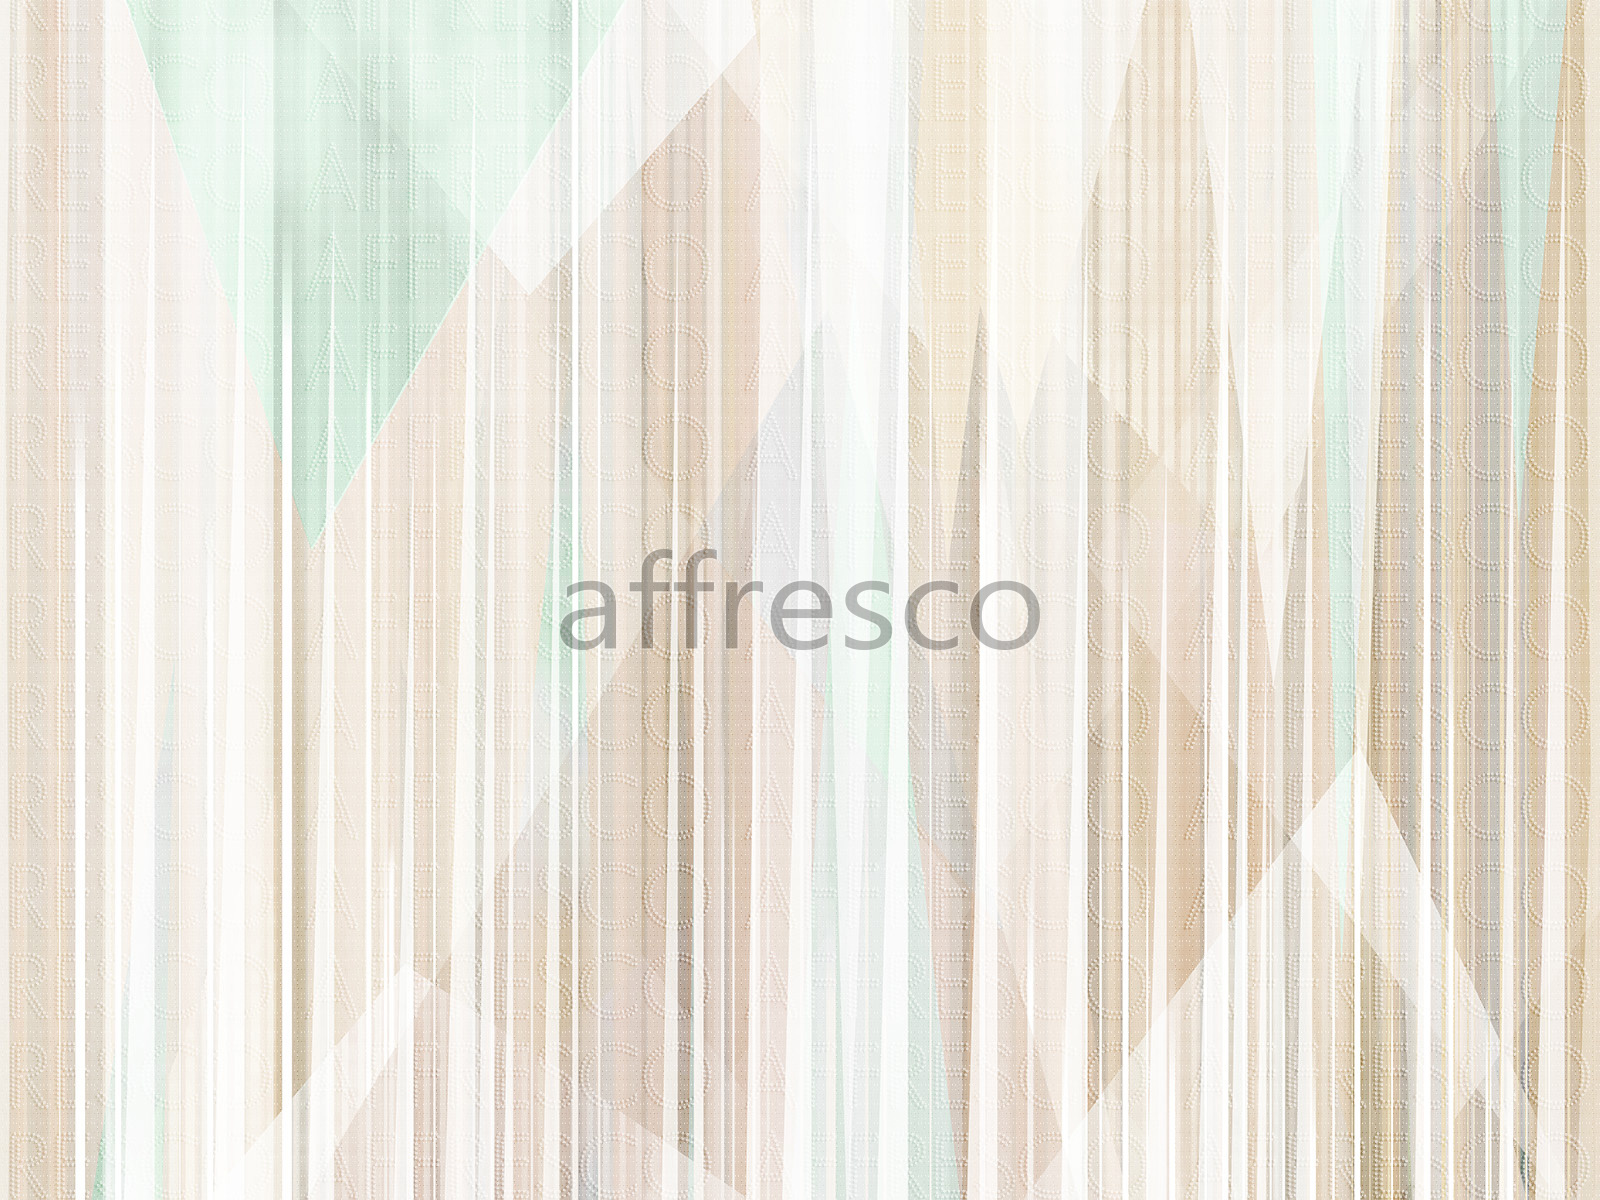 RE930-COL3 | Fine Art | Affresco Factory